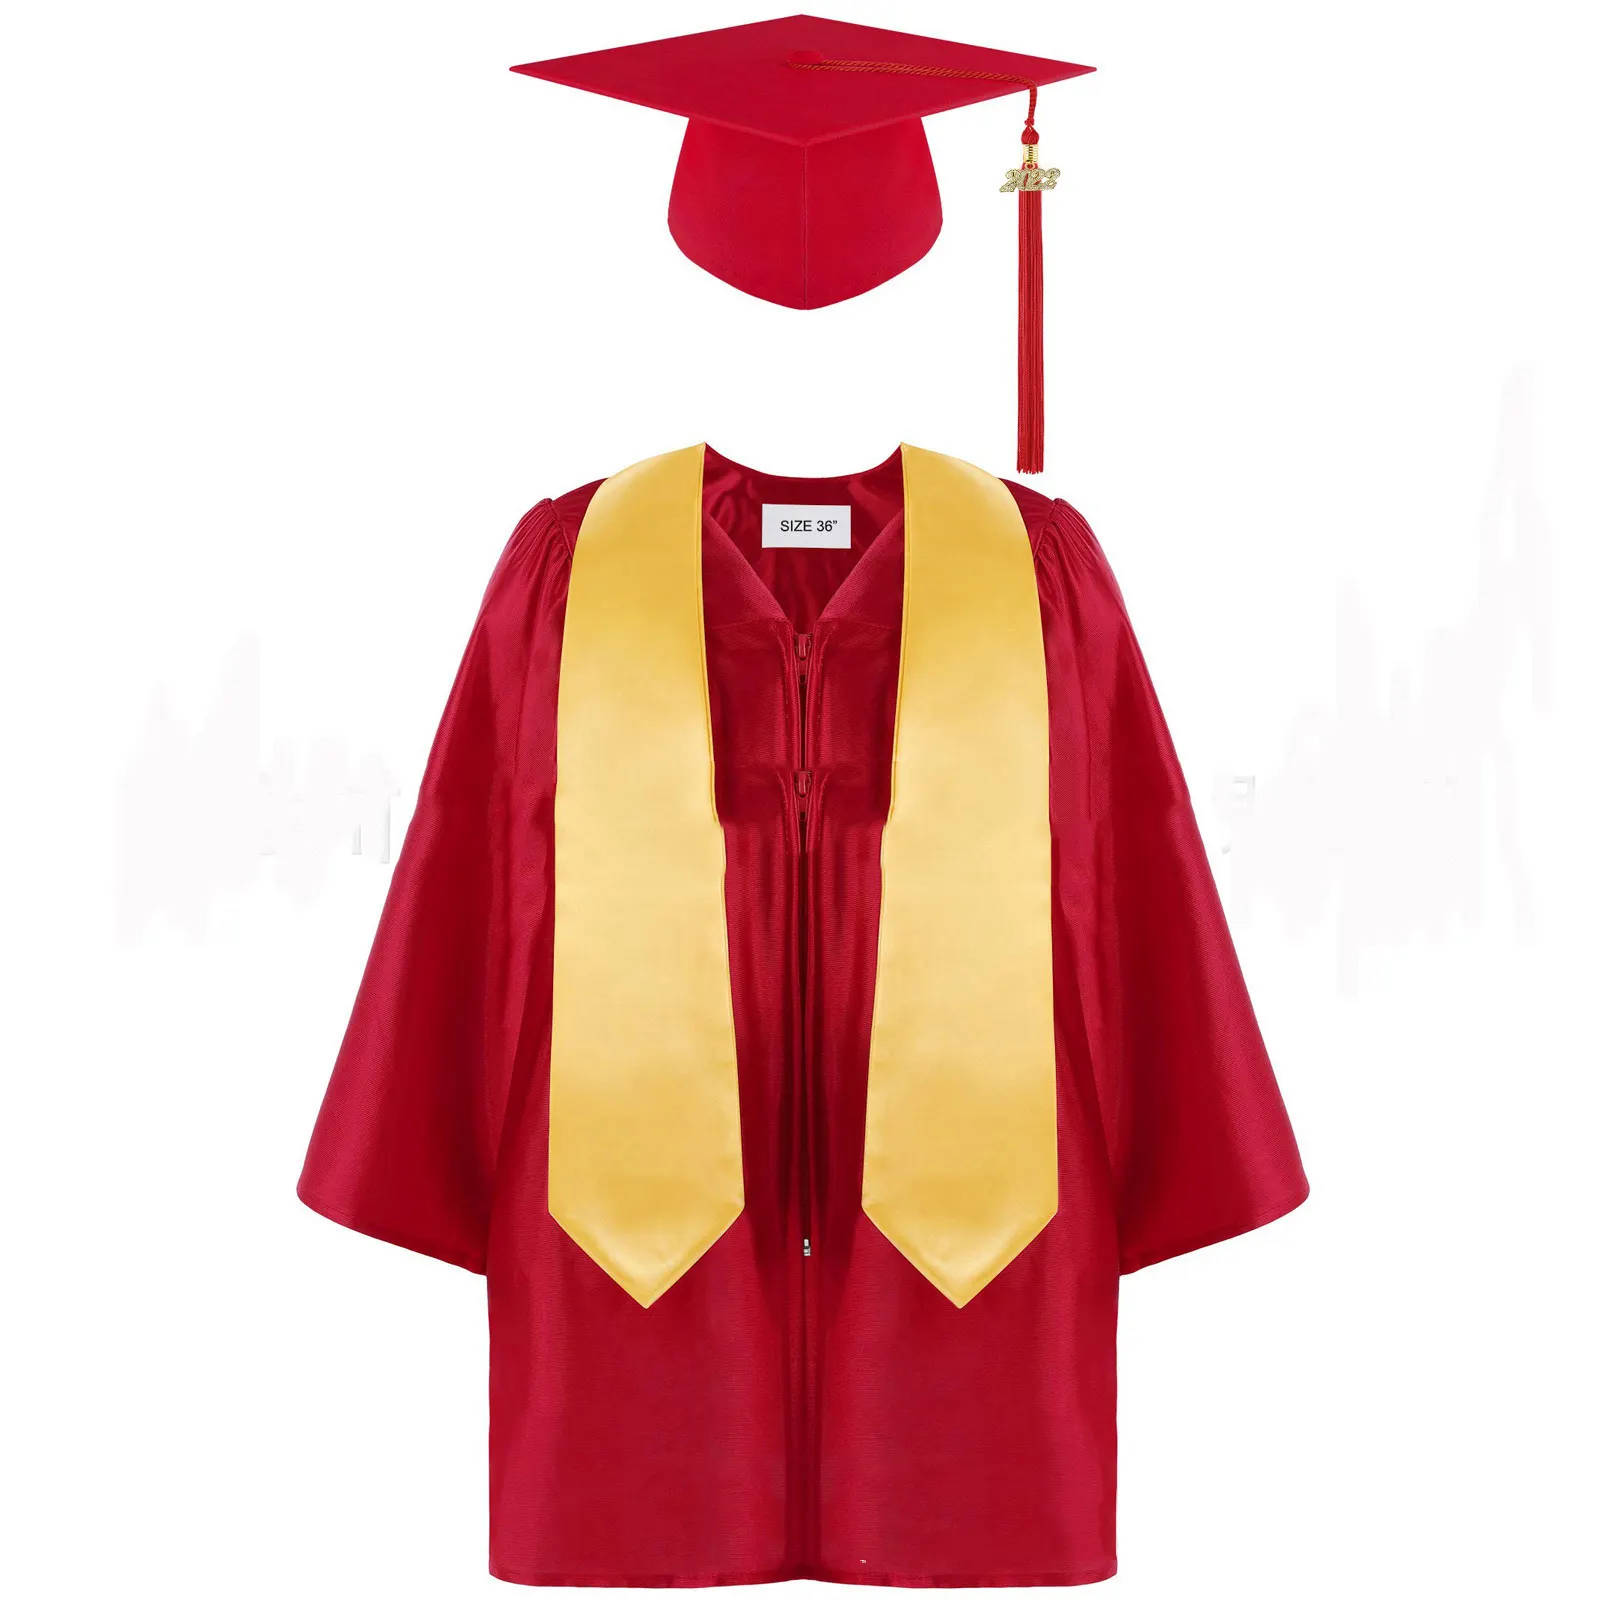 TOPTIE Unisex Kindergarten Kids Graduation Set Gown Cap Tassel 2019 